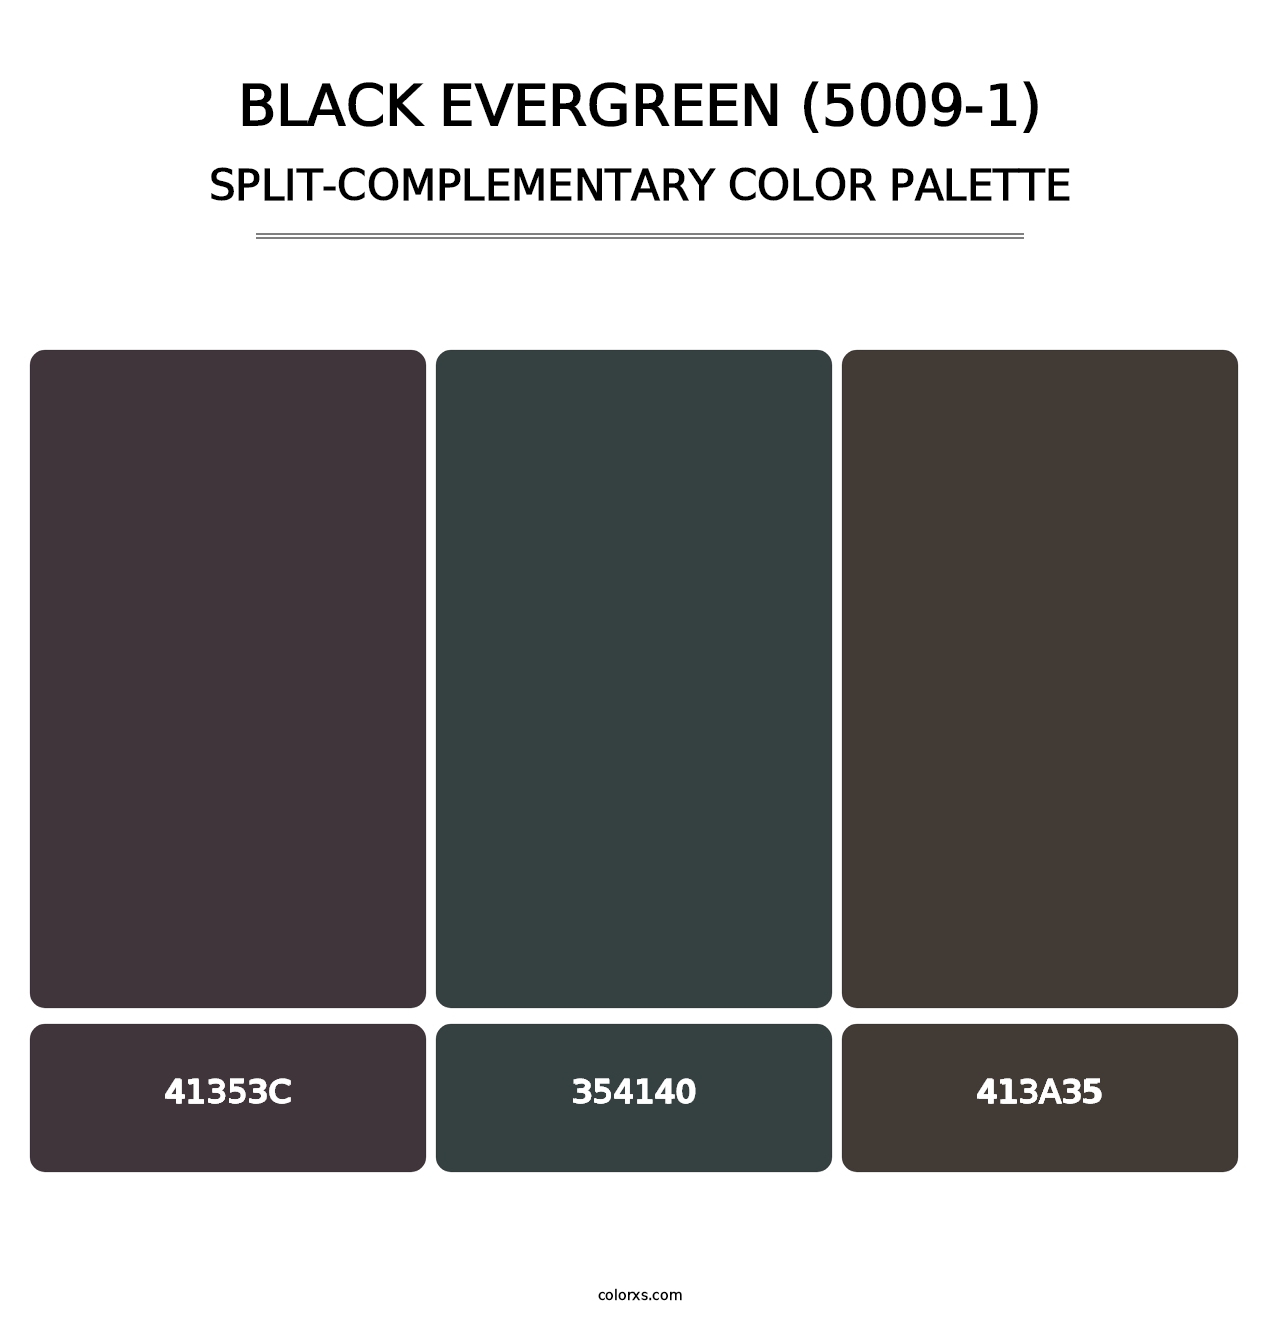 Black Evergreen (5009-1) - Split-Complementary Color Palette